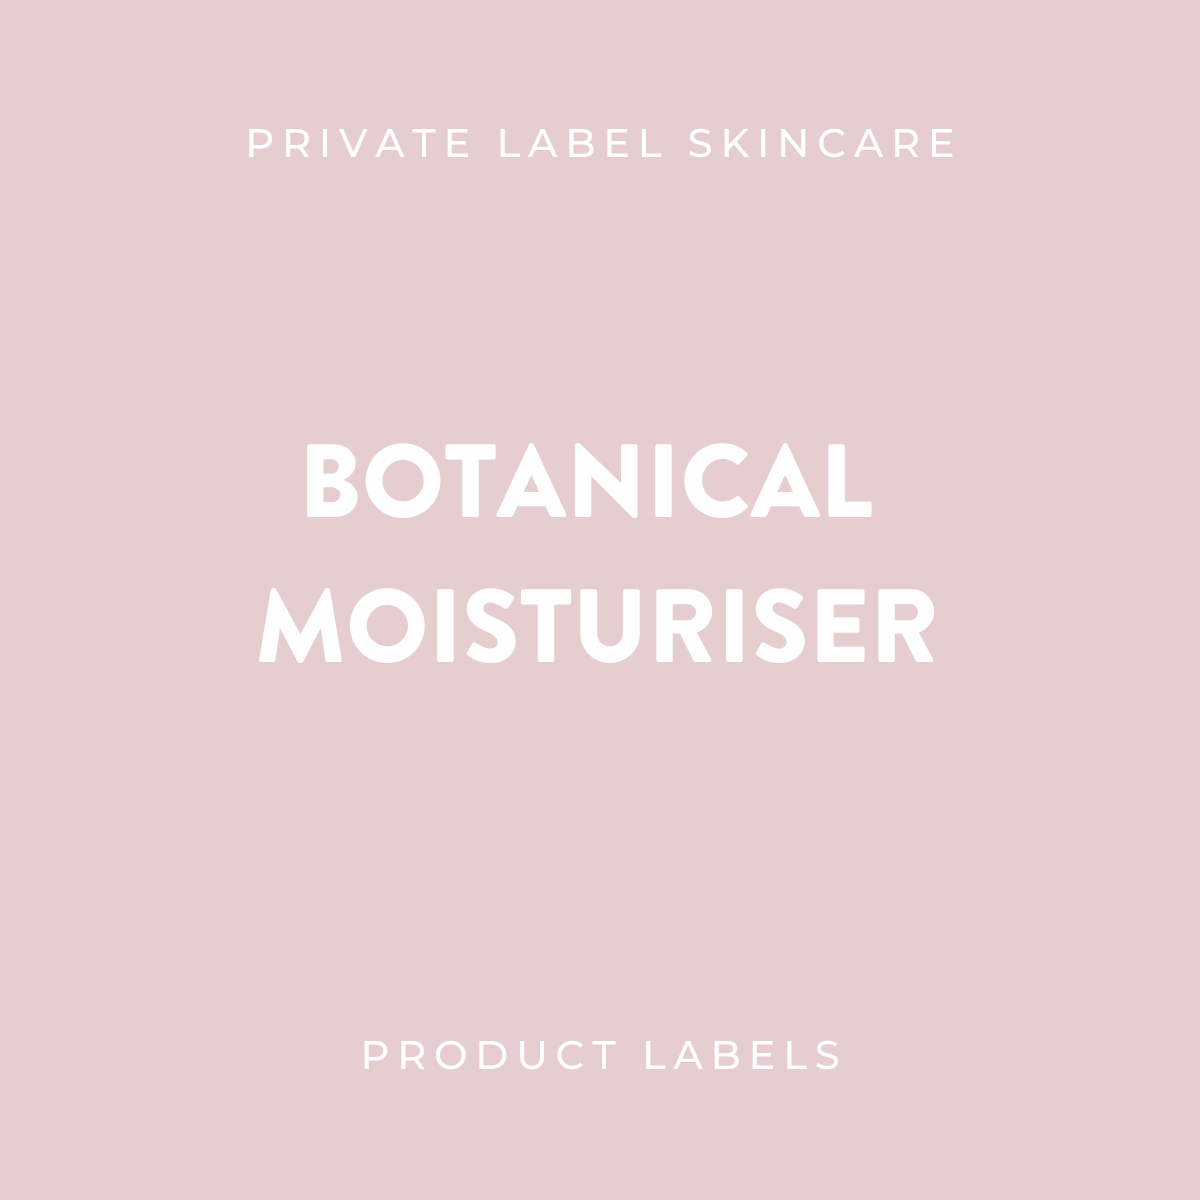 Botanical Moisturiser Product Labels (x 20 labels)